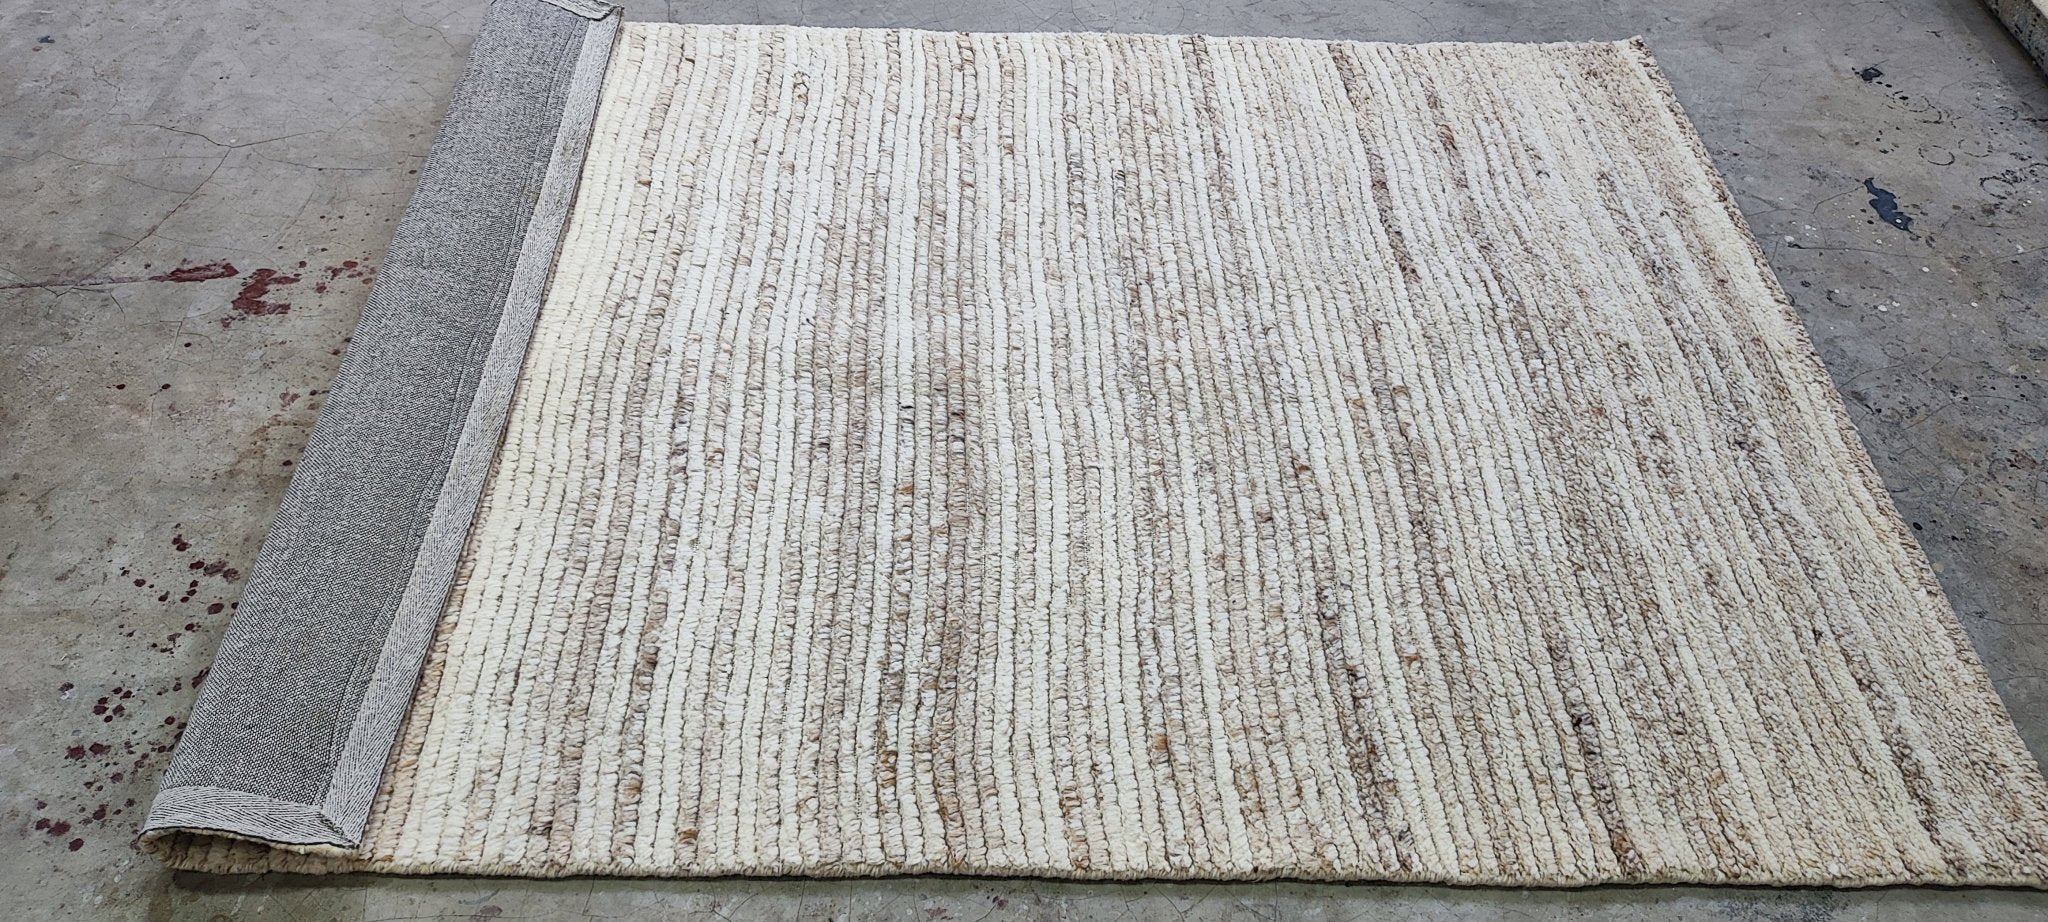 Fernando 4.6x6.6 Handwoven Wool Textured Carpet | Banana Manor Rug Factory Outlet